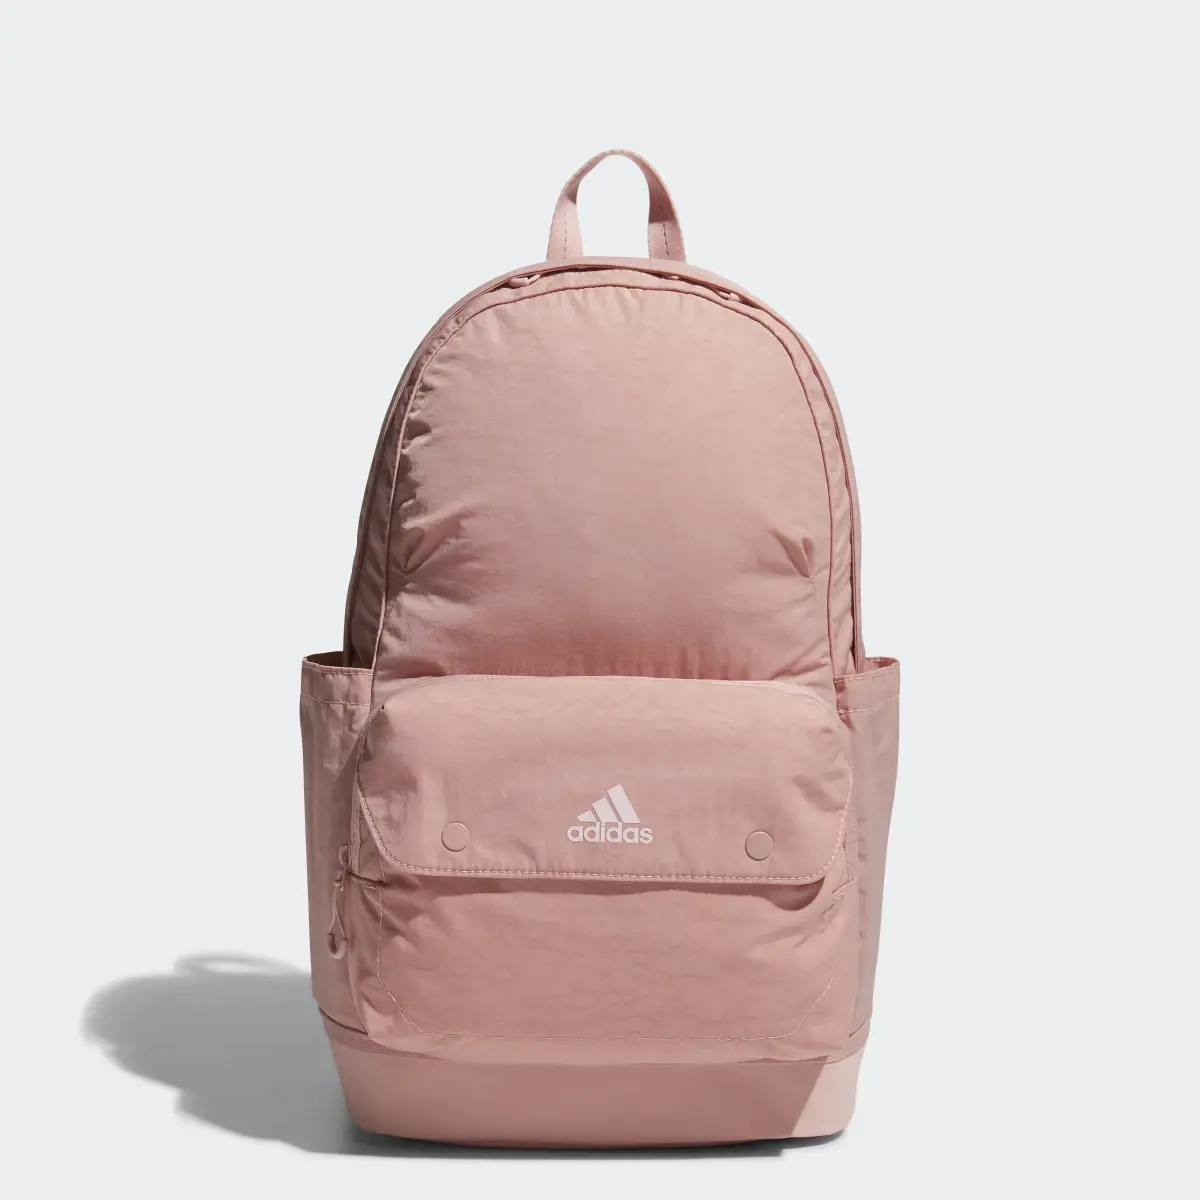 Adidas Backpack. 1